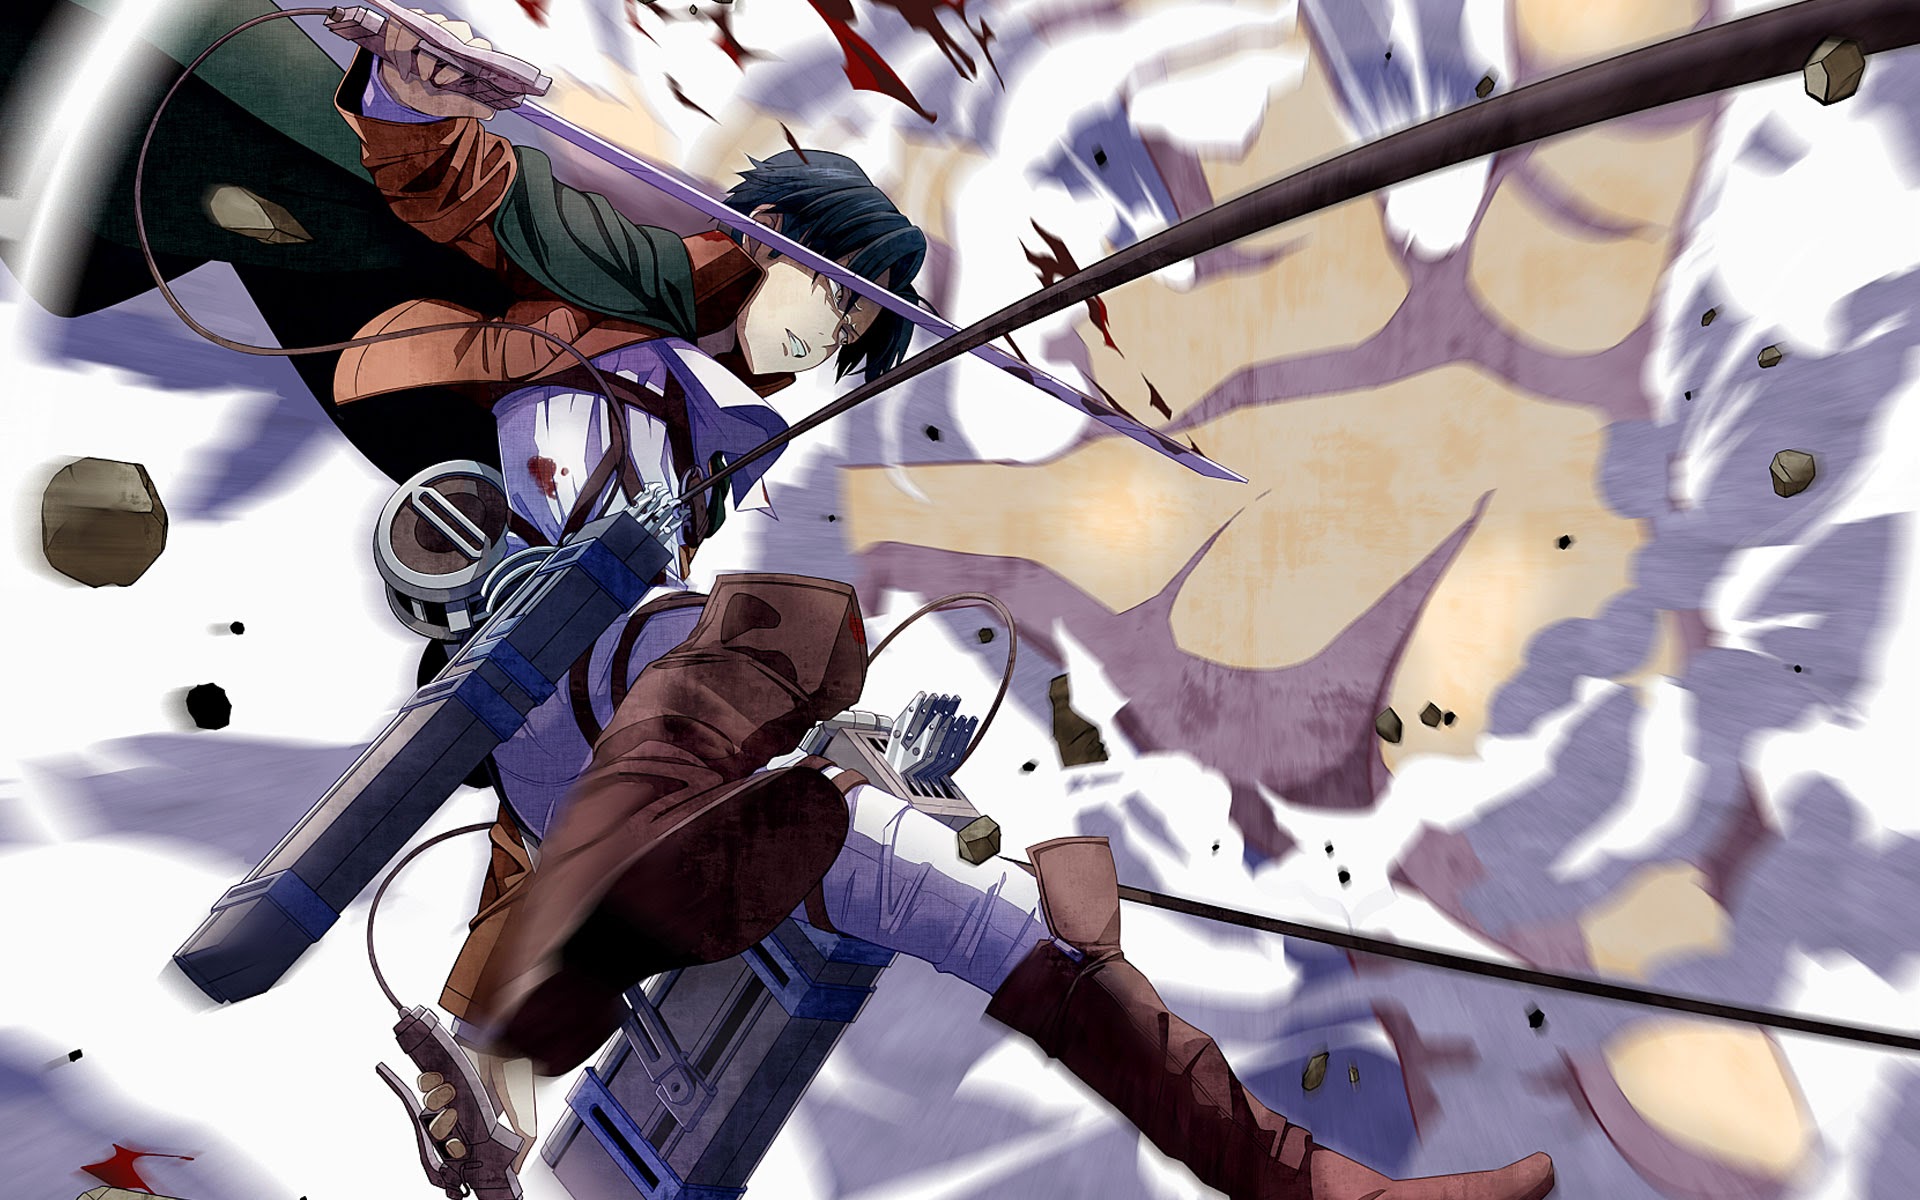  Titan attack on titan shingeki no kyojin anime hd wallpaper 1920x1200 1920x1200